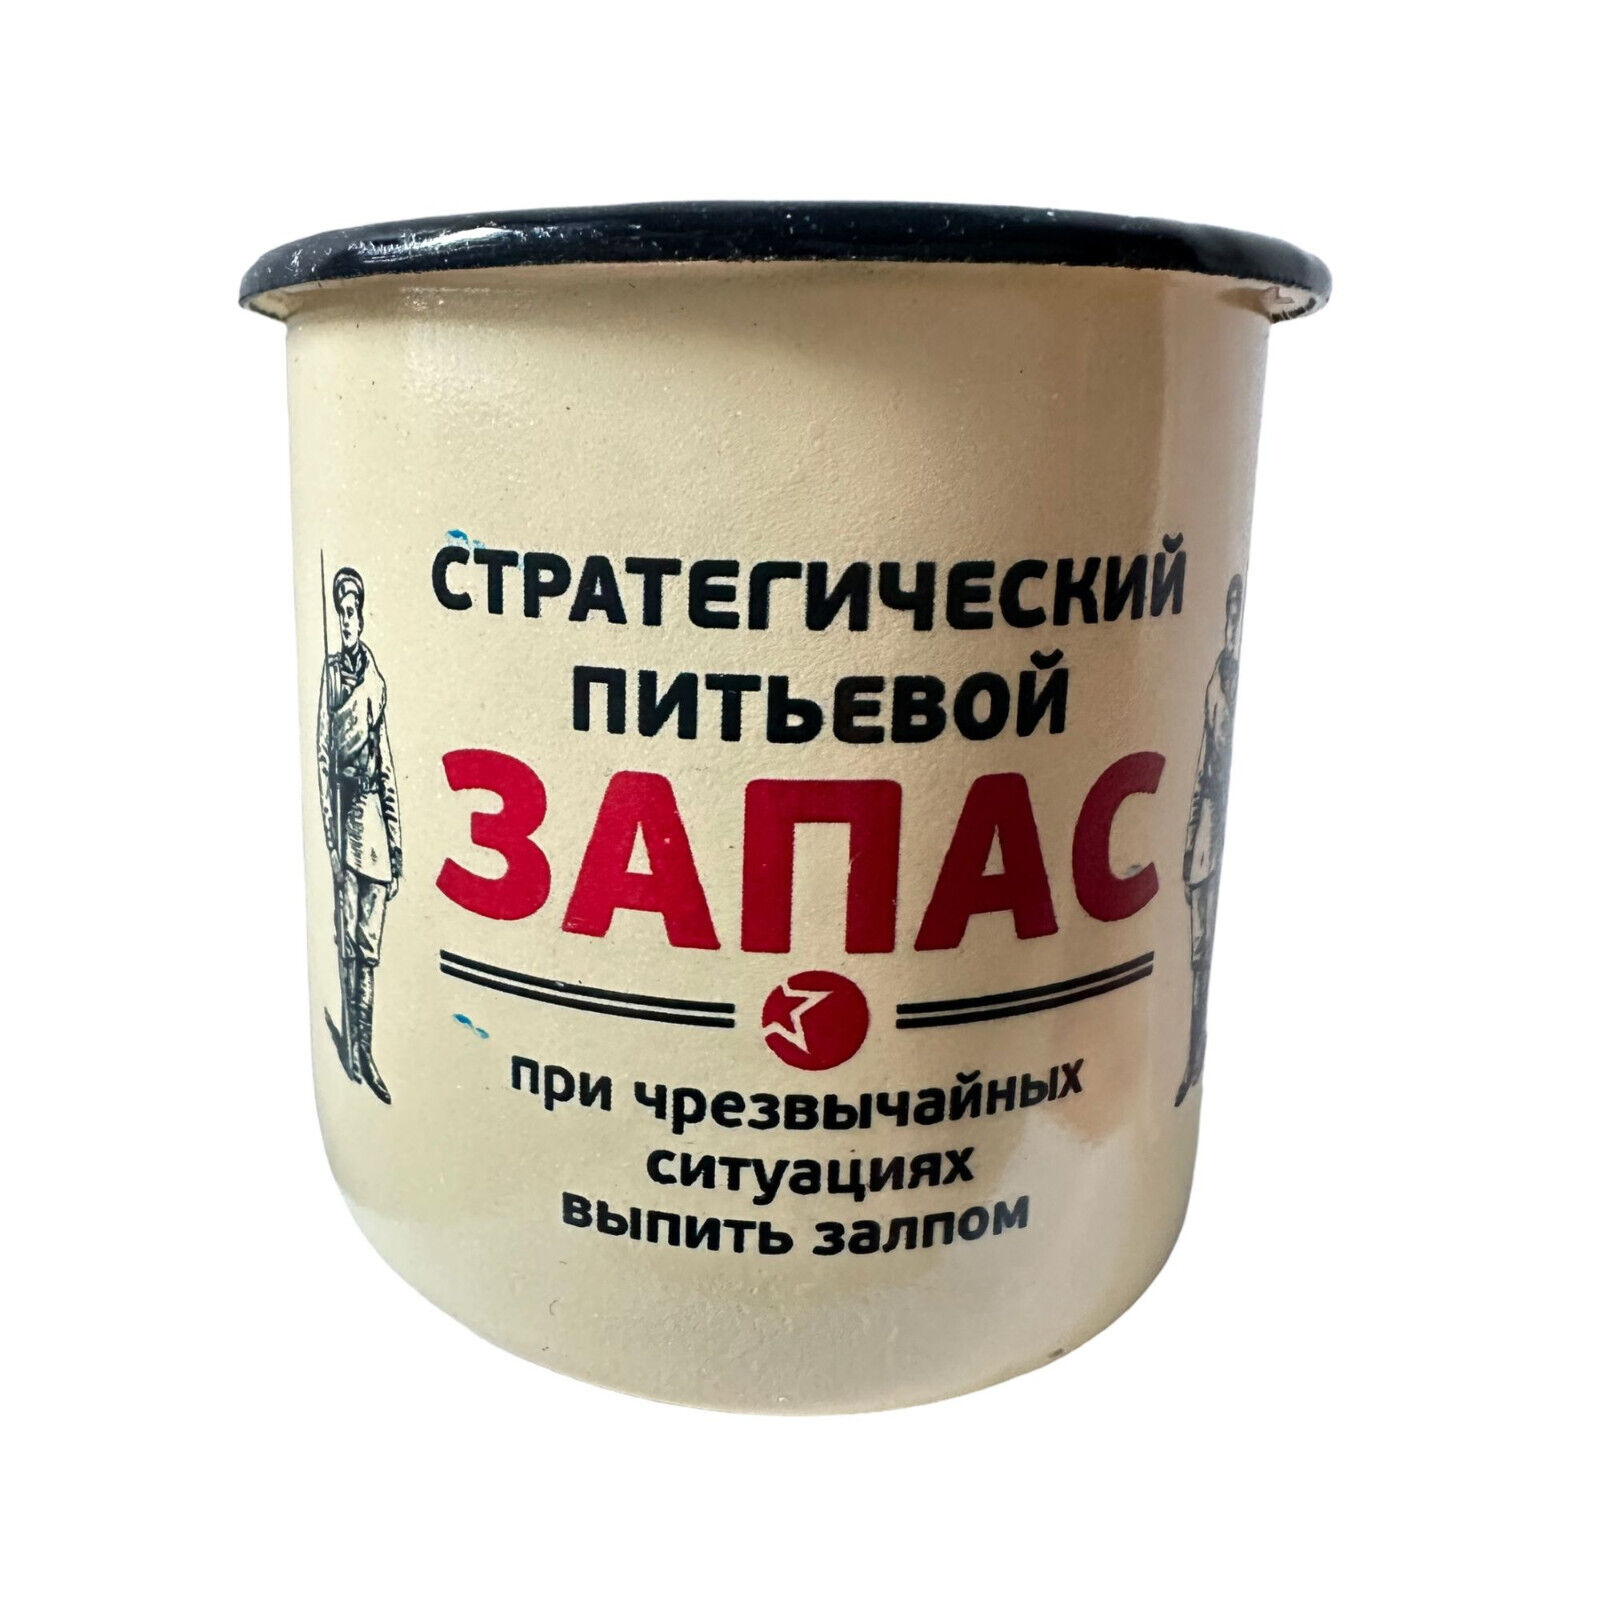 Original Russian USSR Army Soldier Metal Enameled Cup Mug New.Nos Cream.